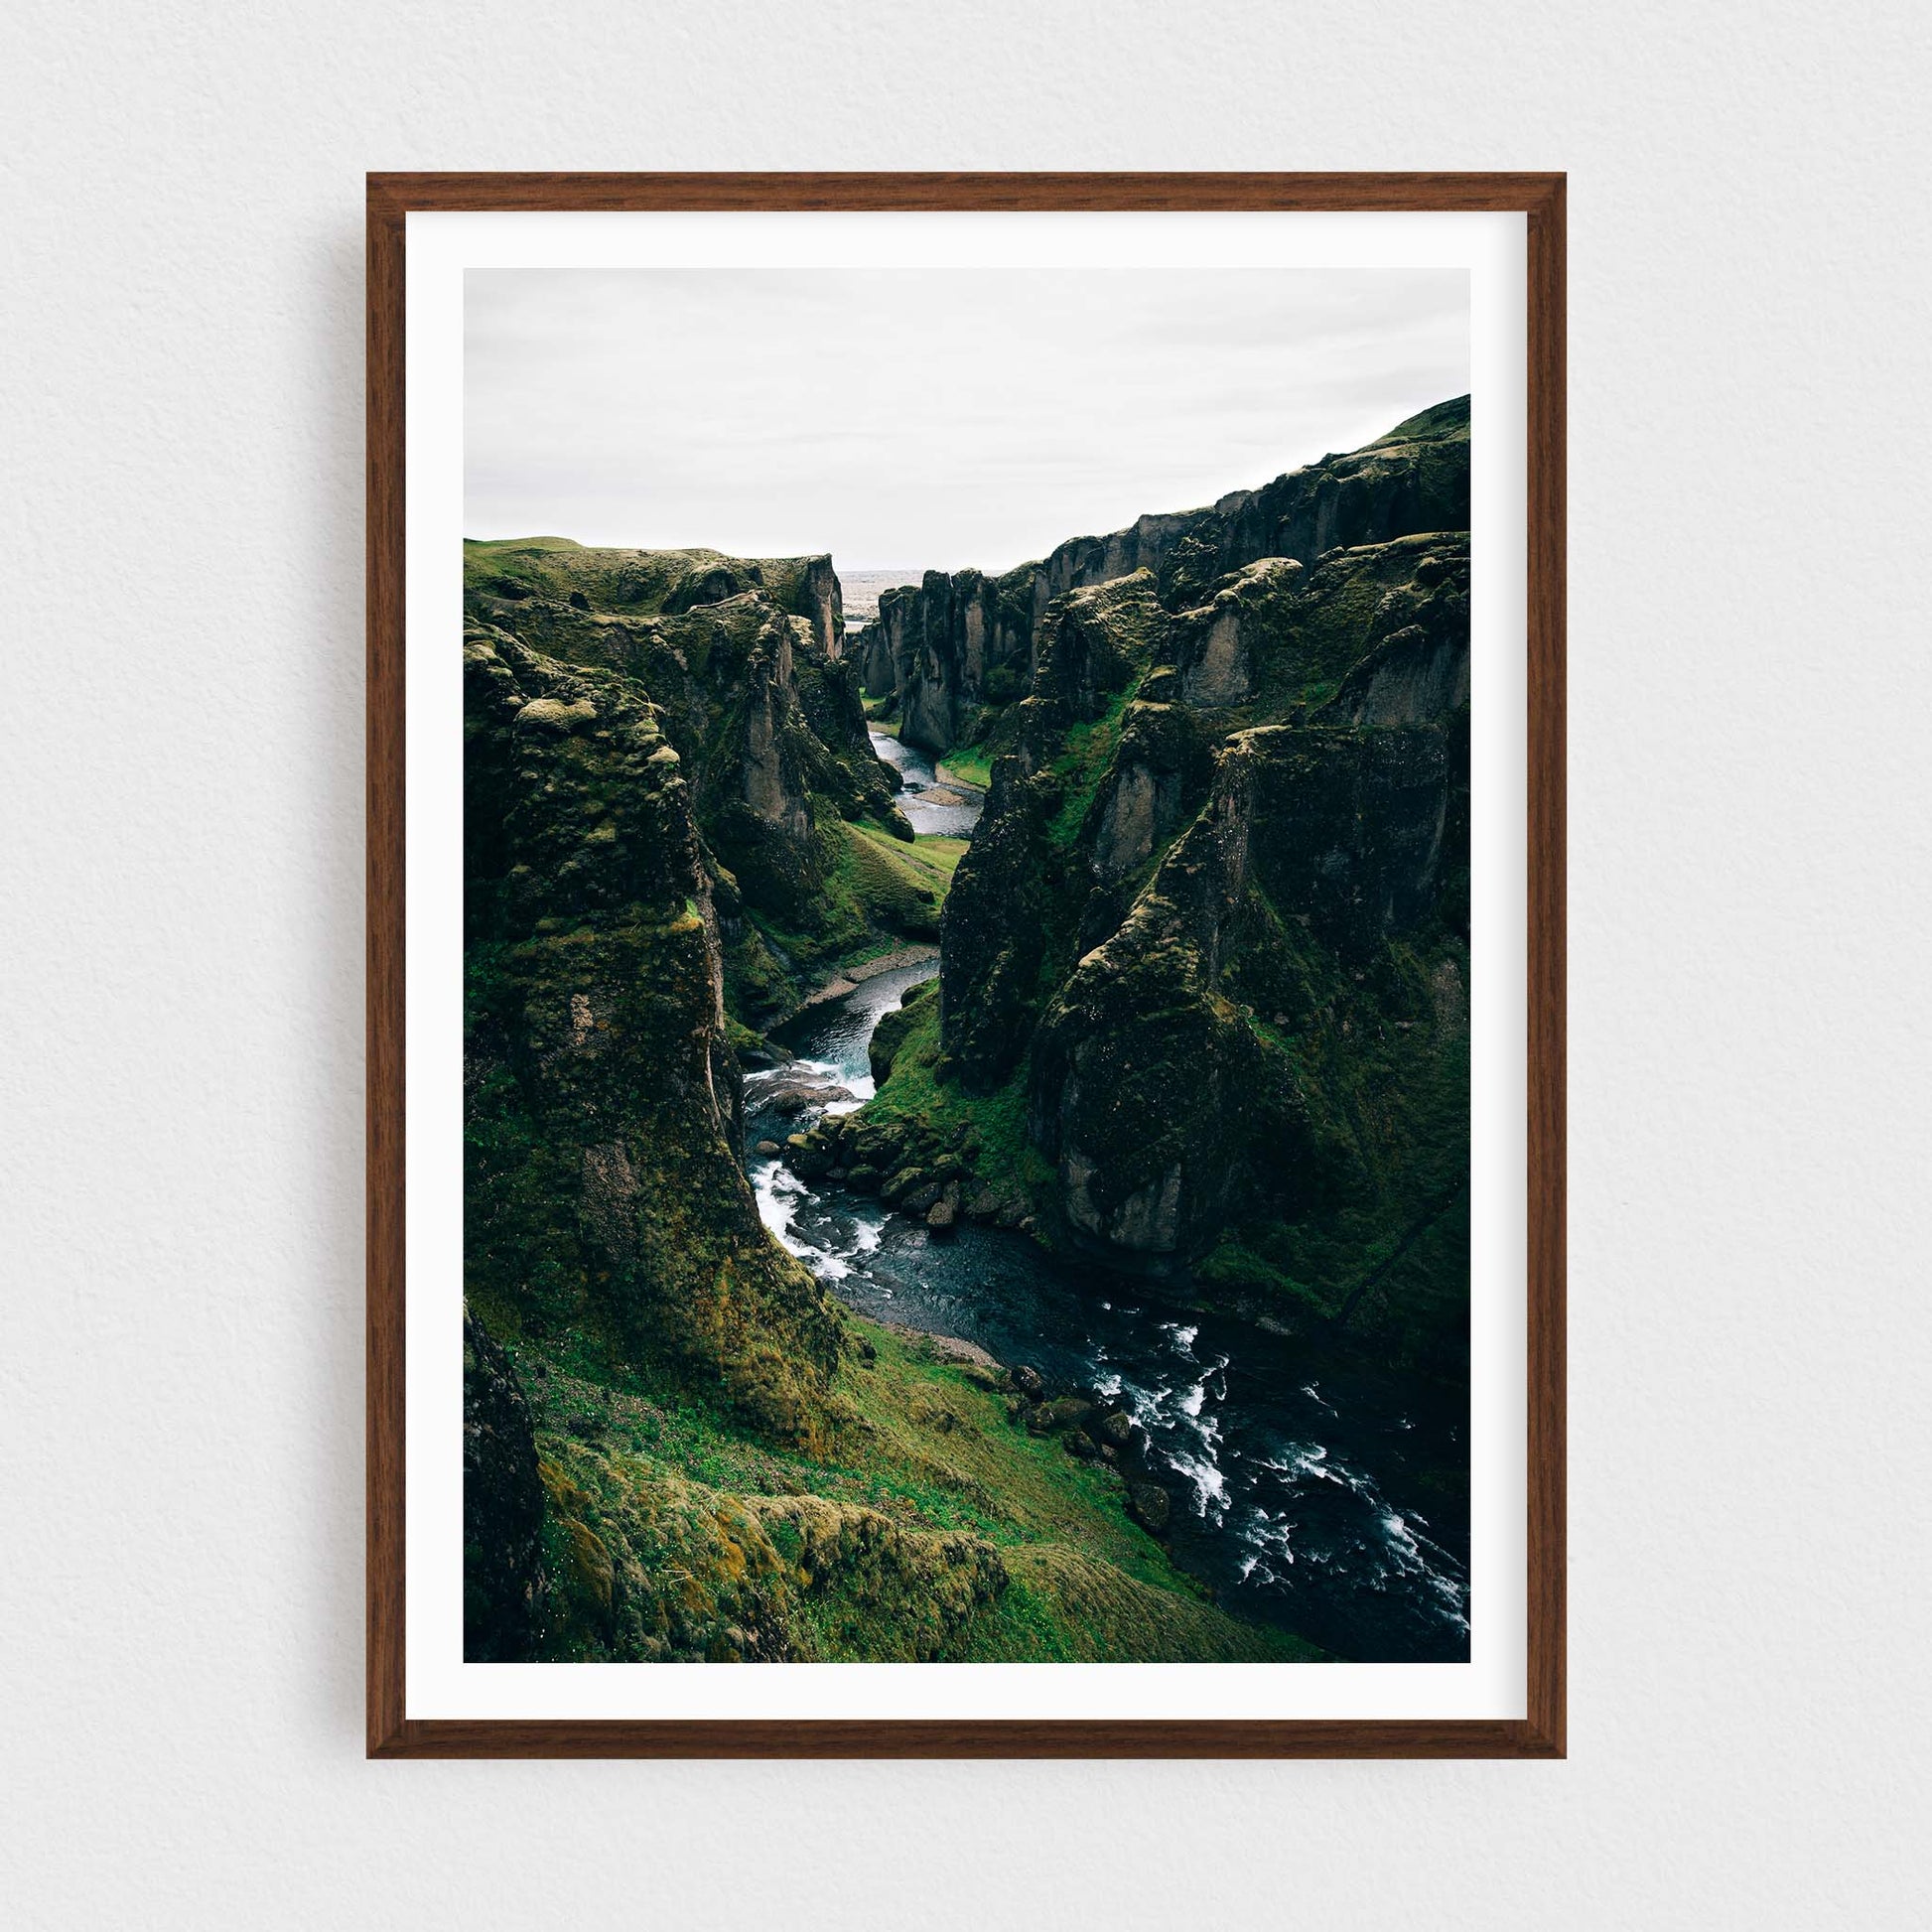 Iceland fine art photography print featuring Fjadrargljufur green canyon, in walnut frame